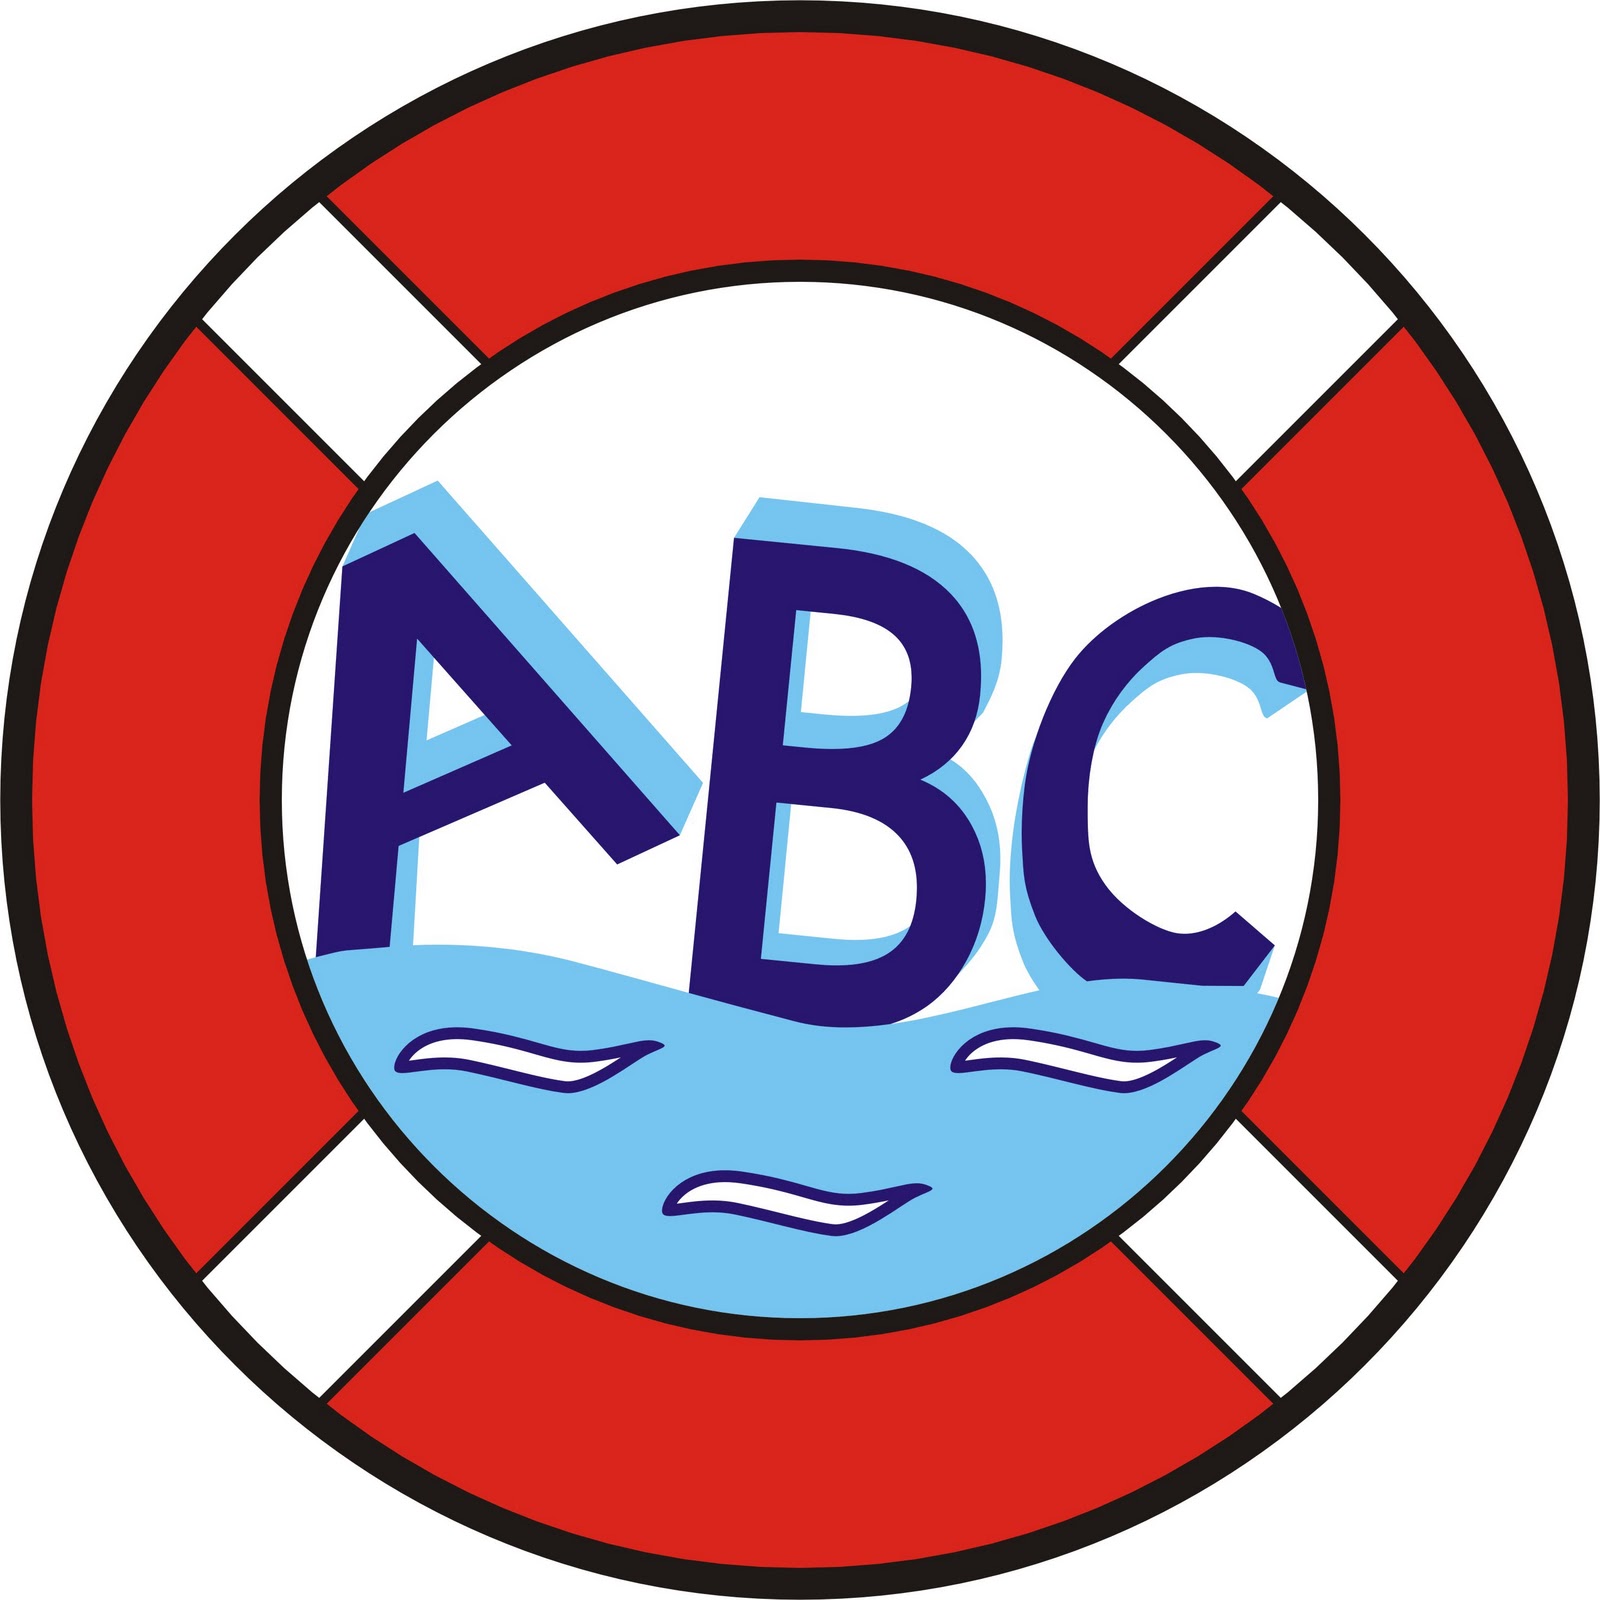 My Logo Pictures: ABC Logos